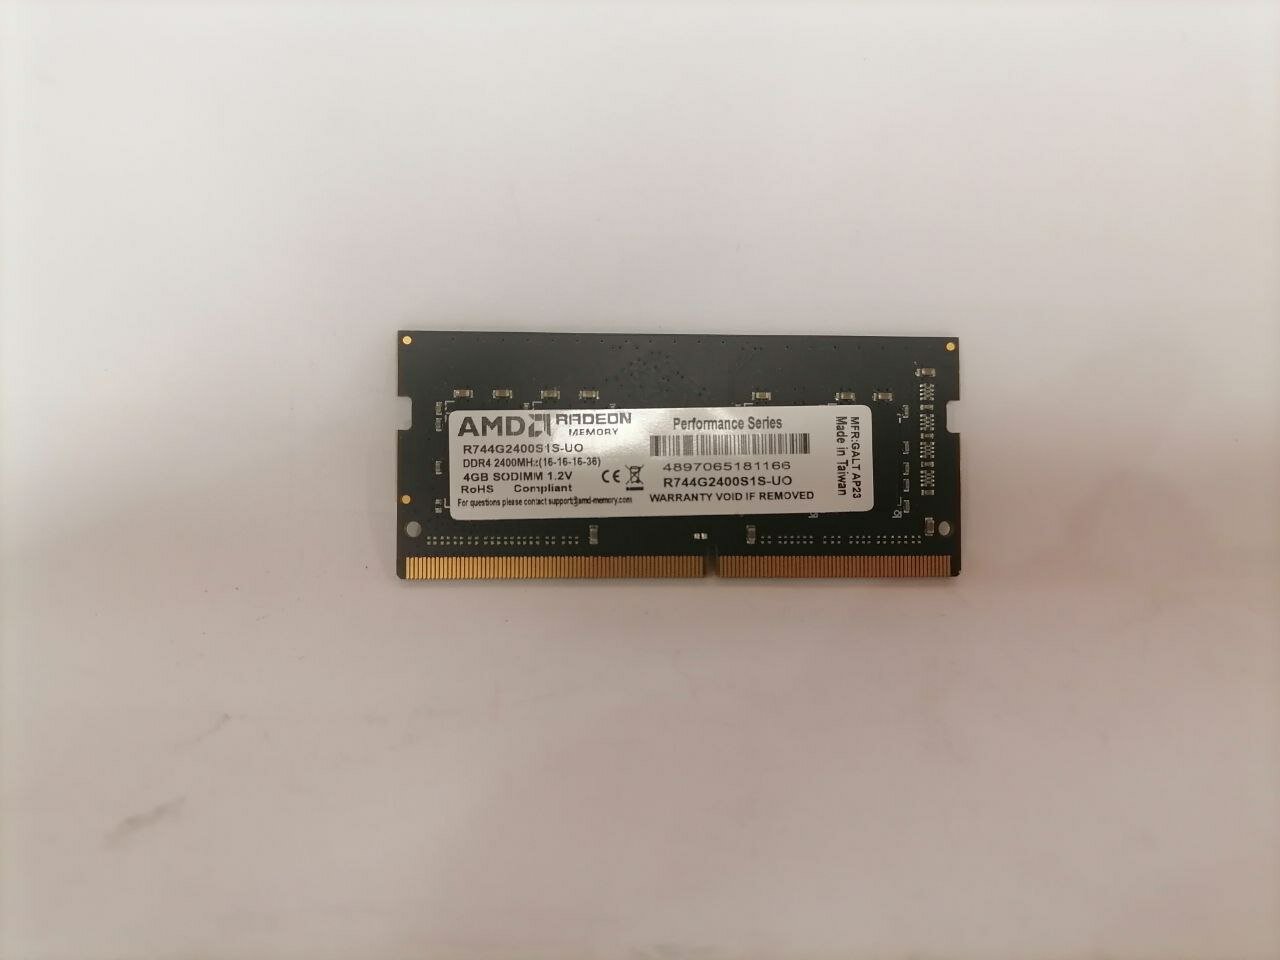 Память оперативная AMD R744G2400S1S-UO DDR4 4GB 2400MHz Radeon R7 Performance Series OEM PC4-19200 CL17 SO-DIMM